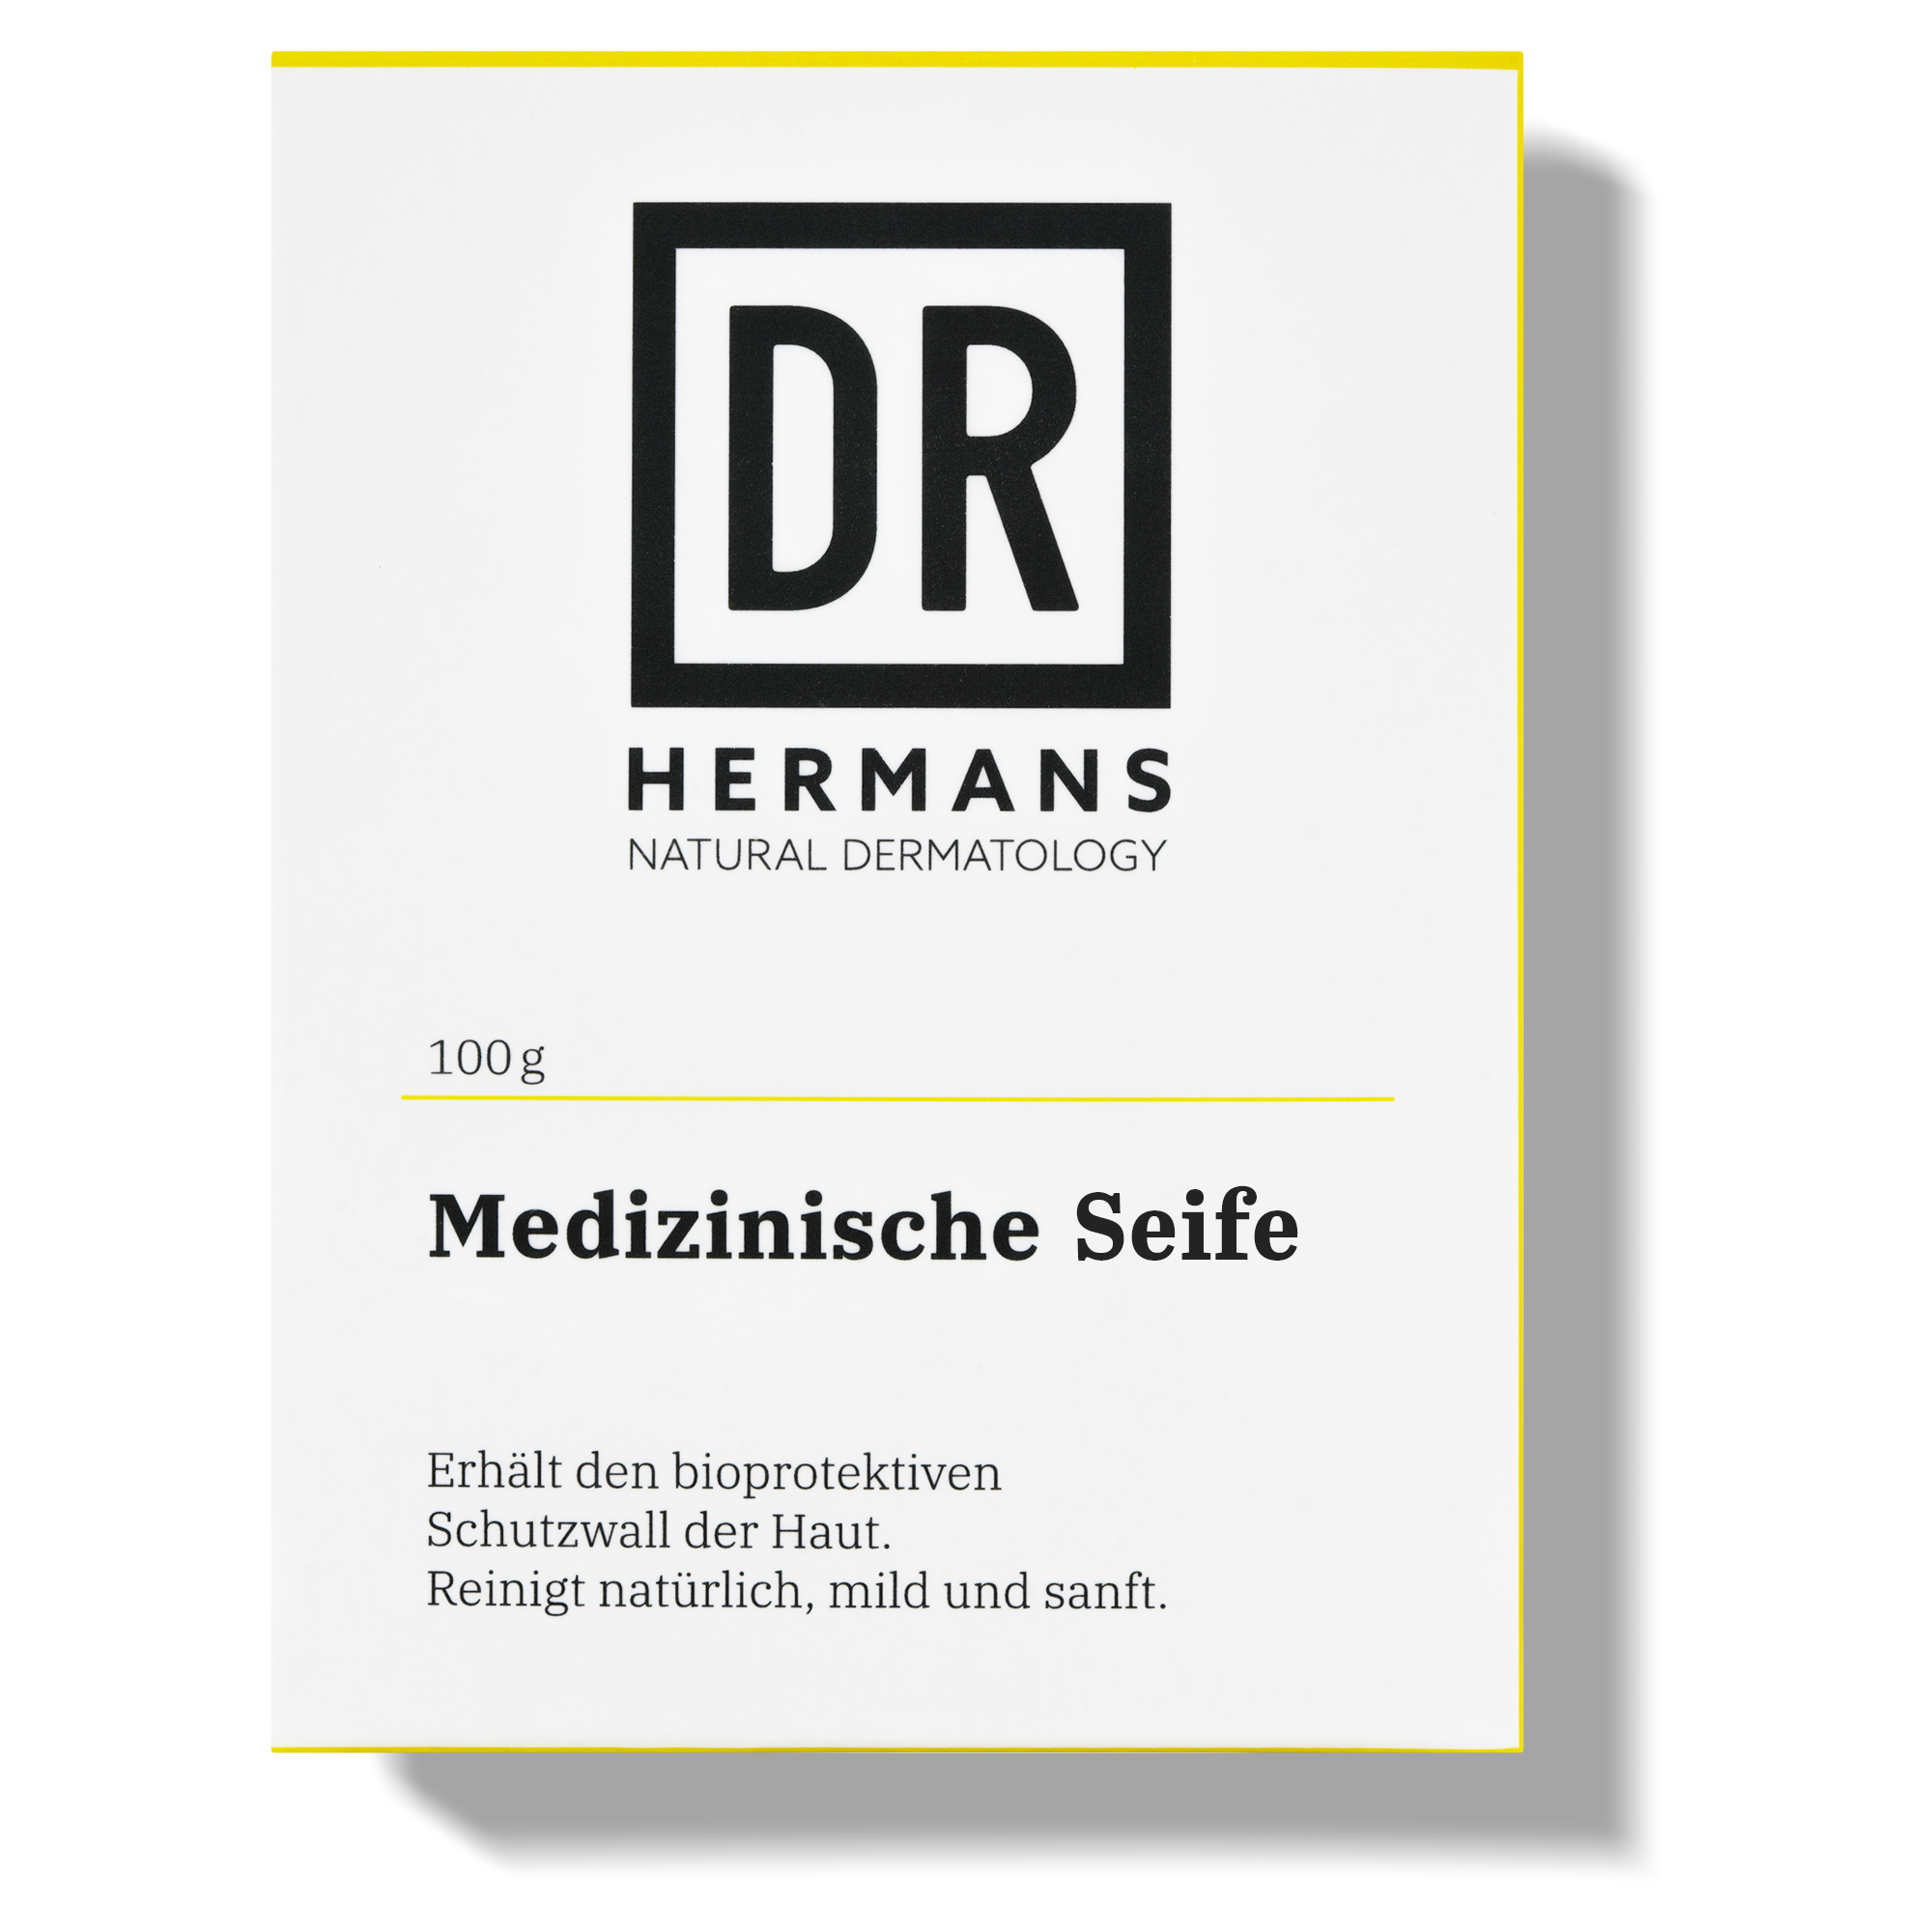 DR HERMANS medizinische Seife